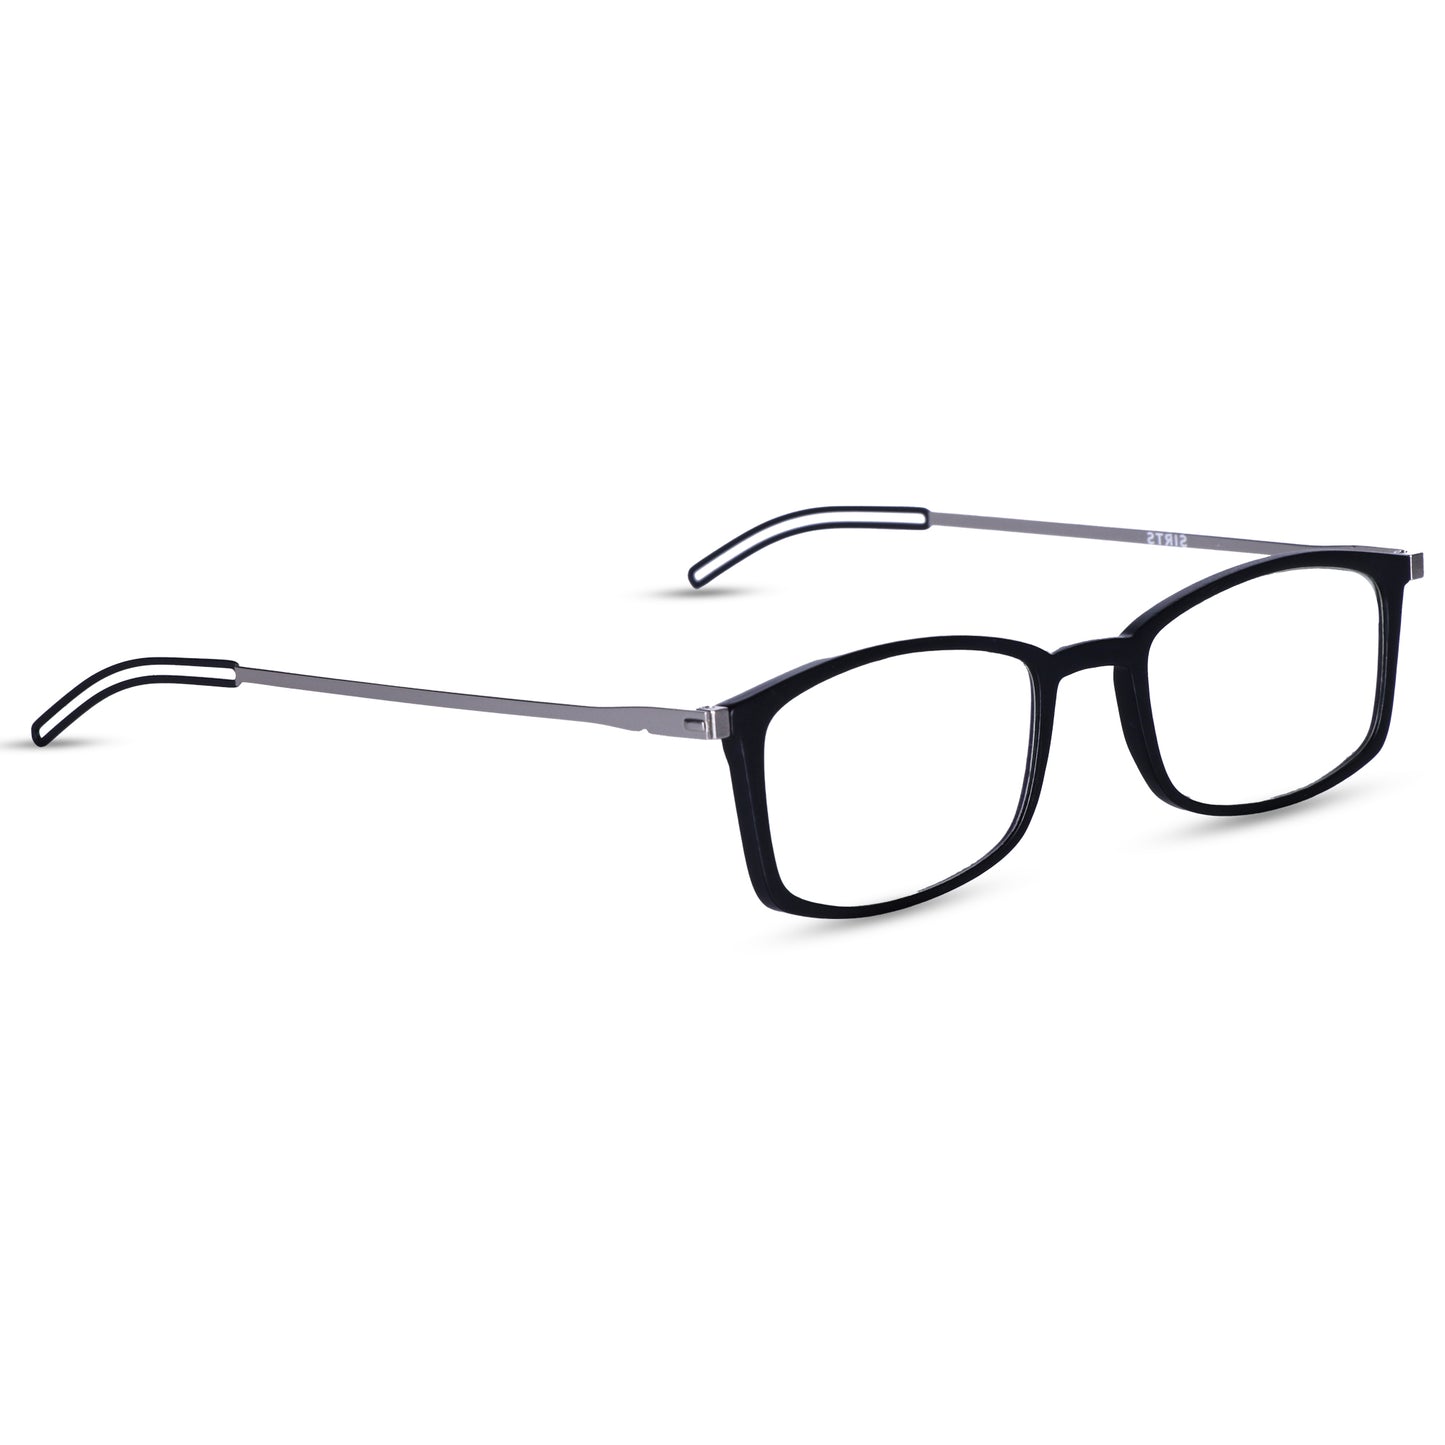 Sirts Thin Black Rectangular Reading Glasses +2.00